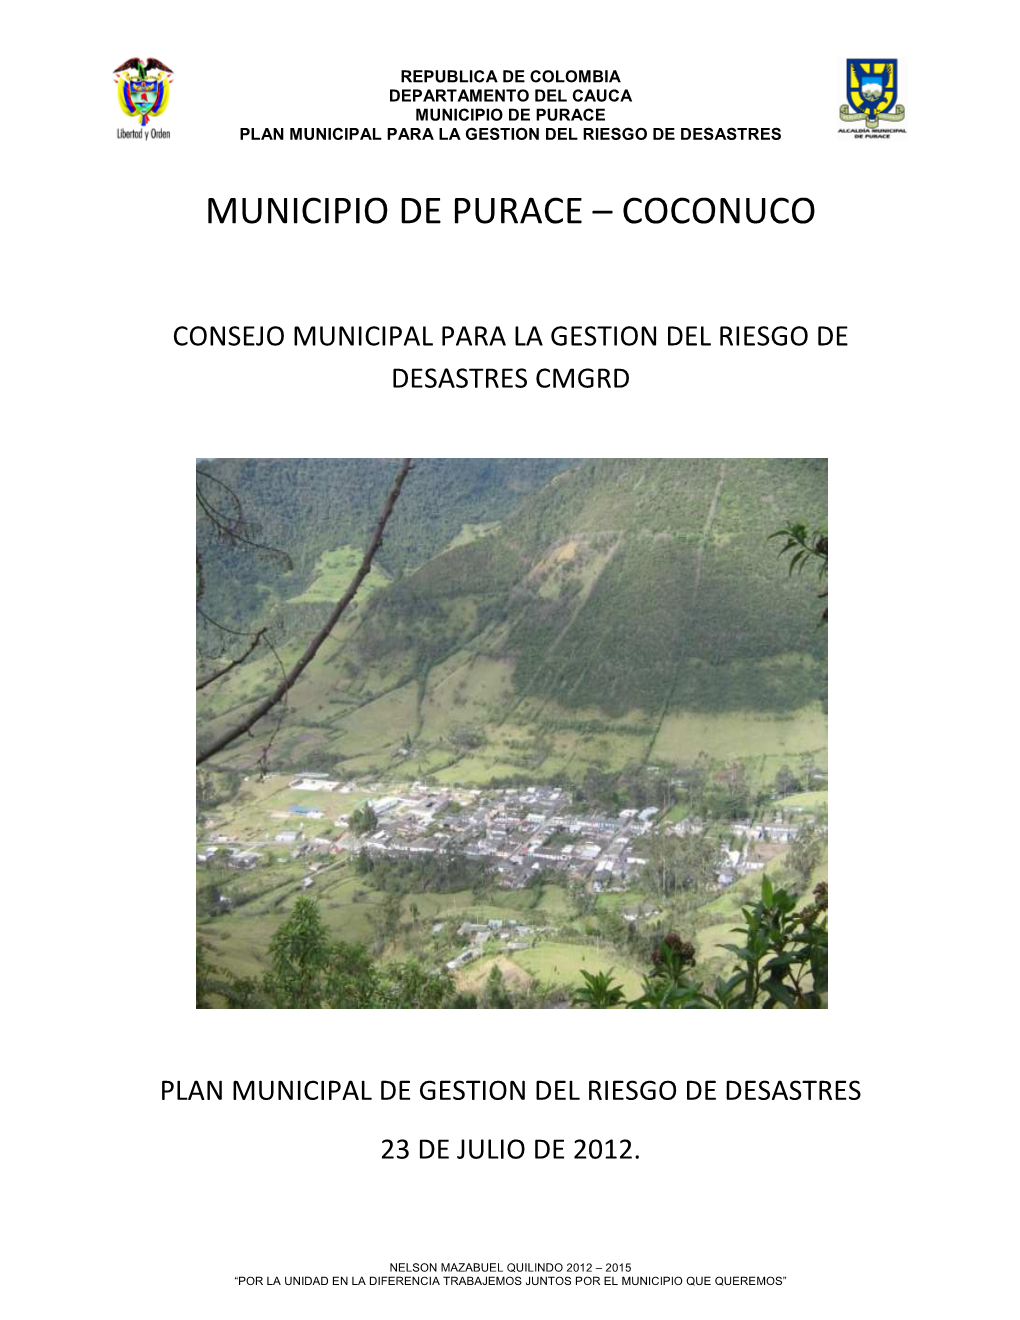 Municipio De Purace – Coconuco